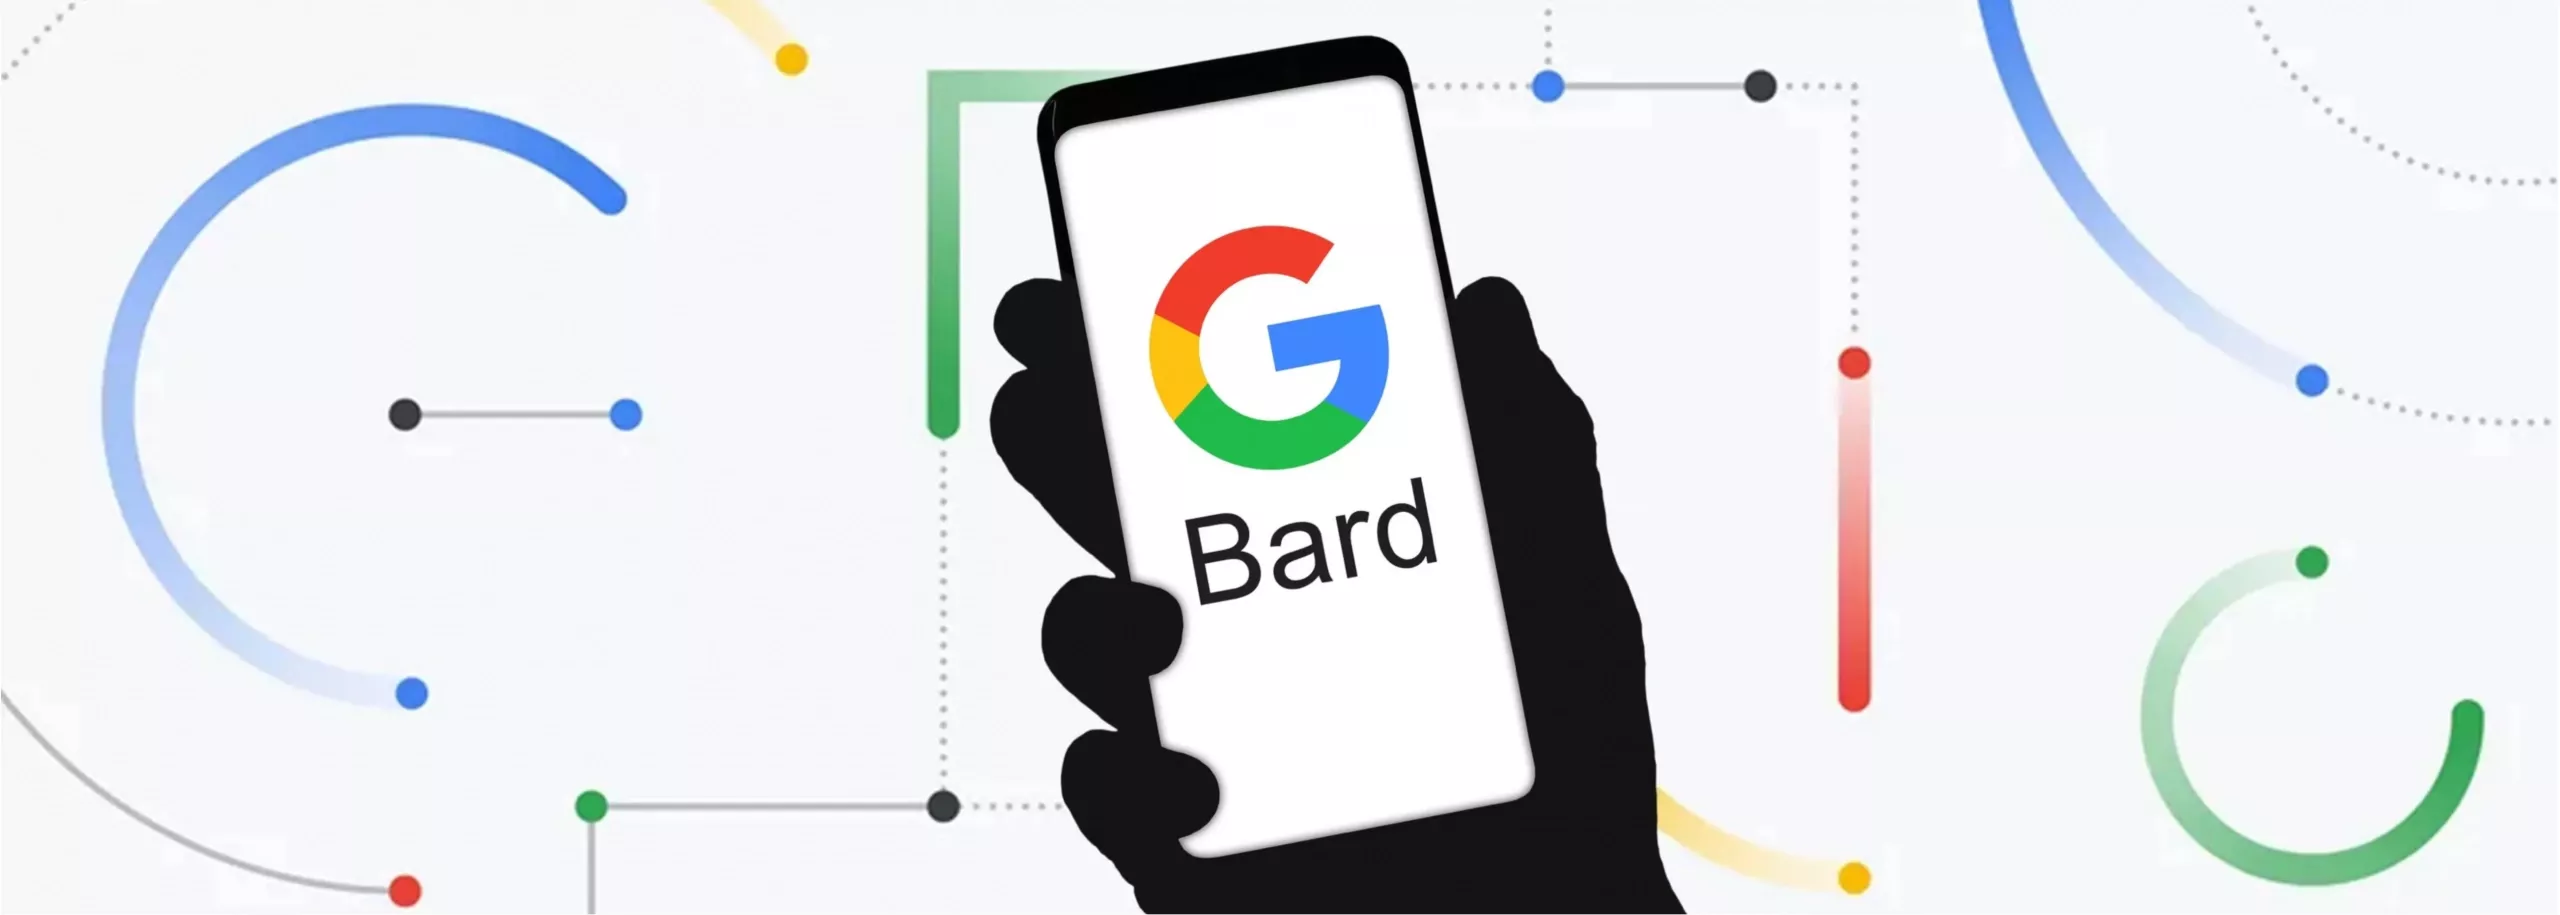 Google Bard چه زمانی منتشر شد